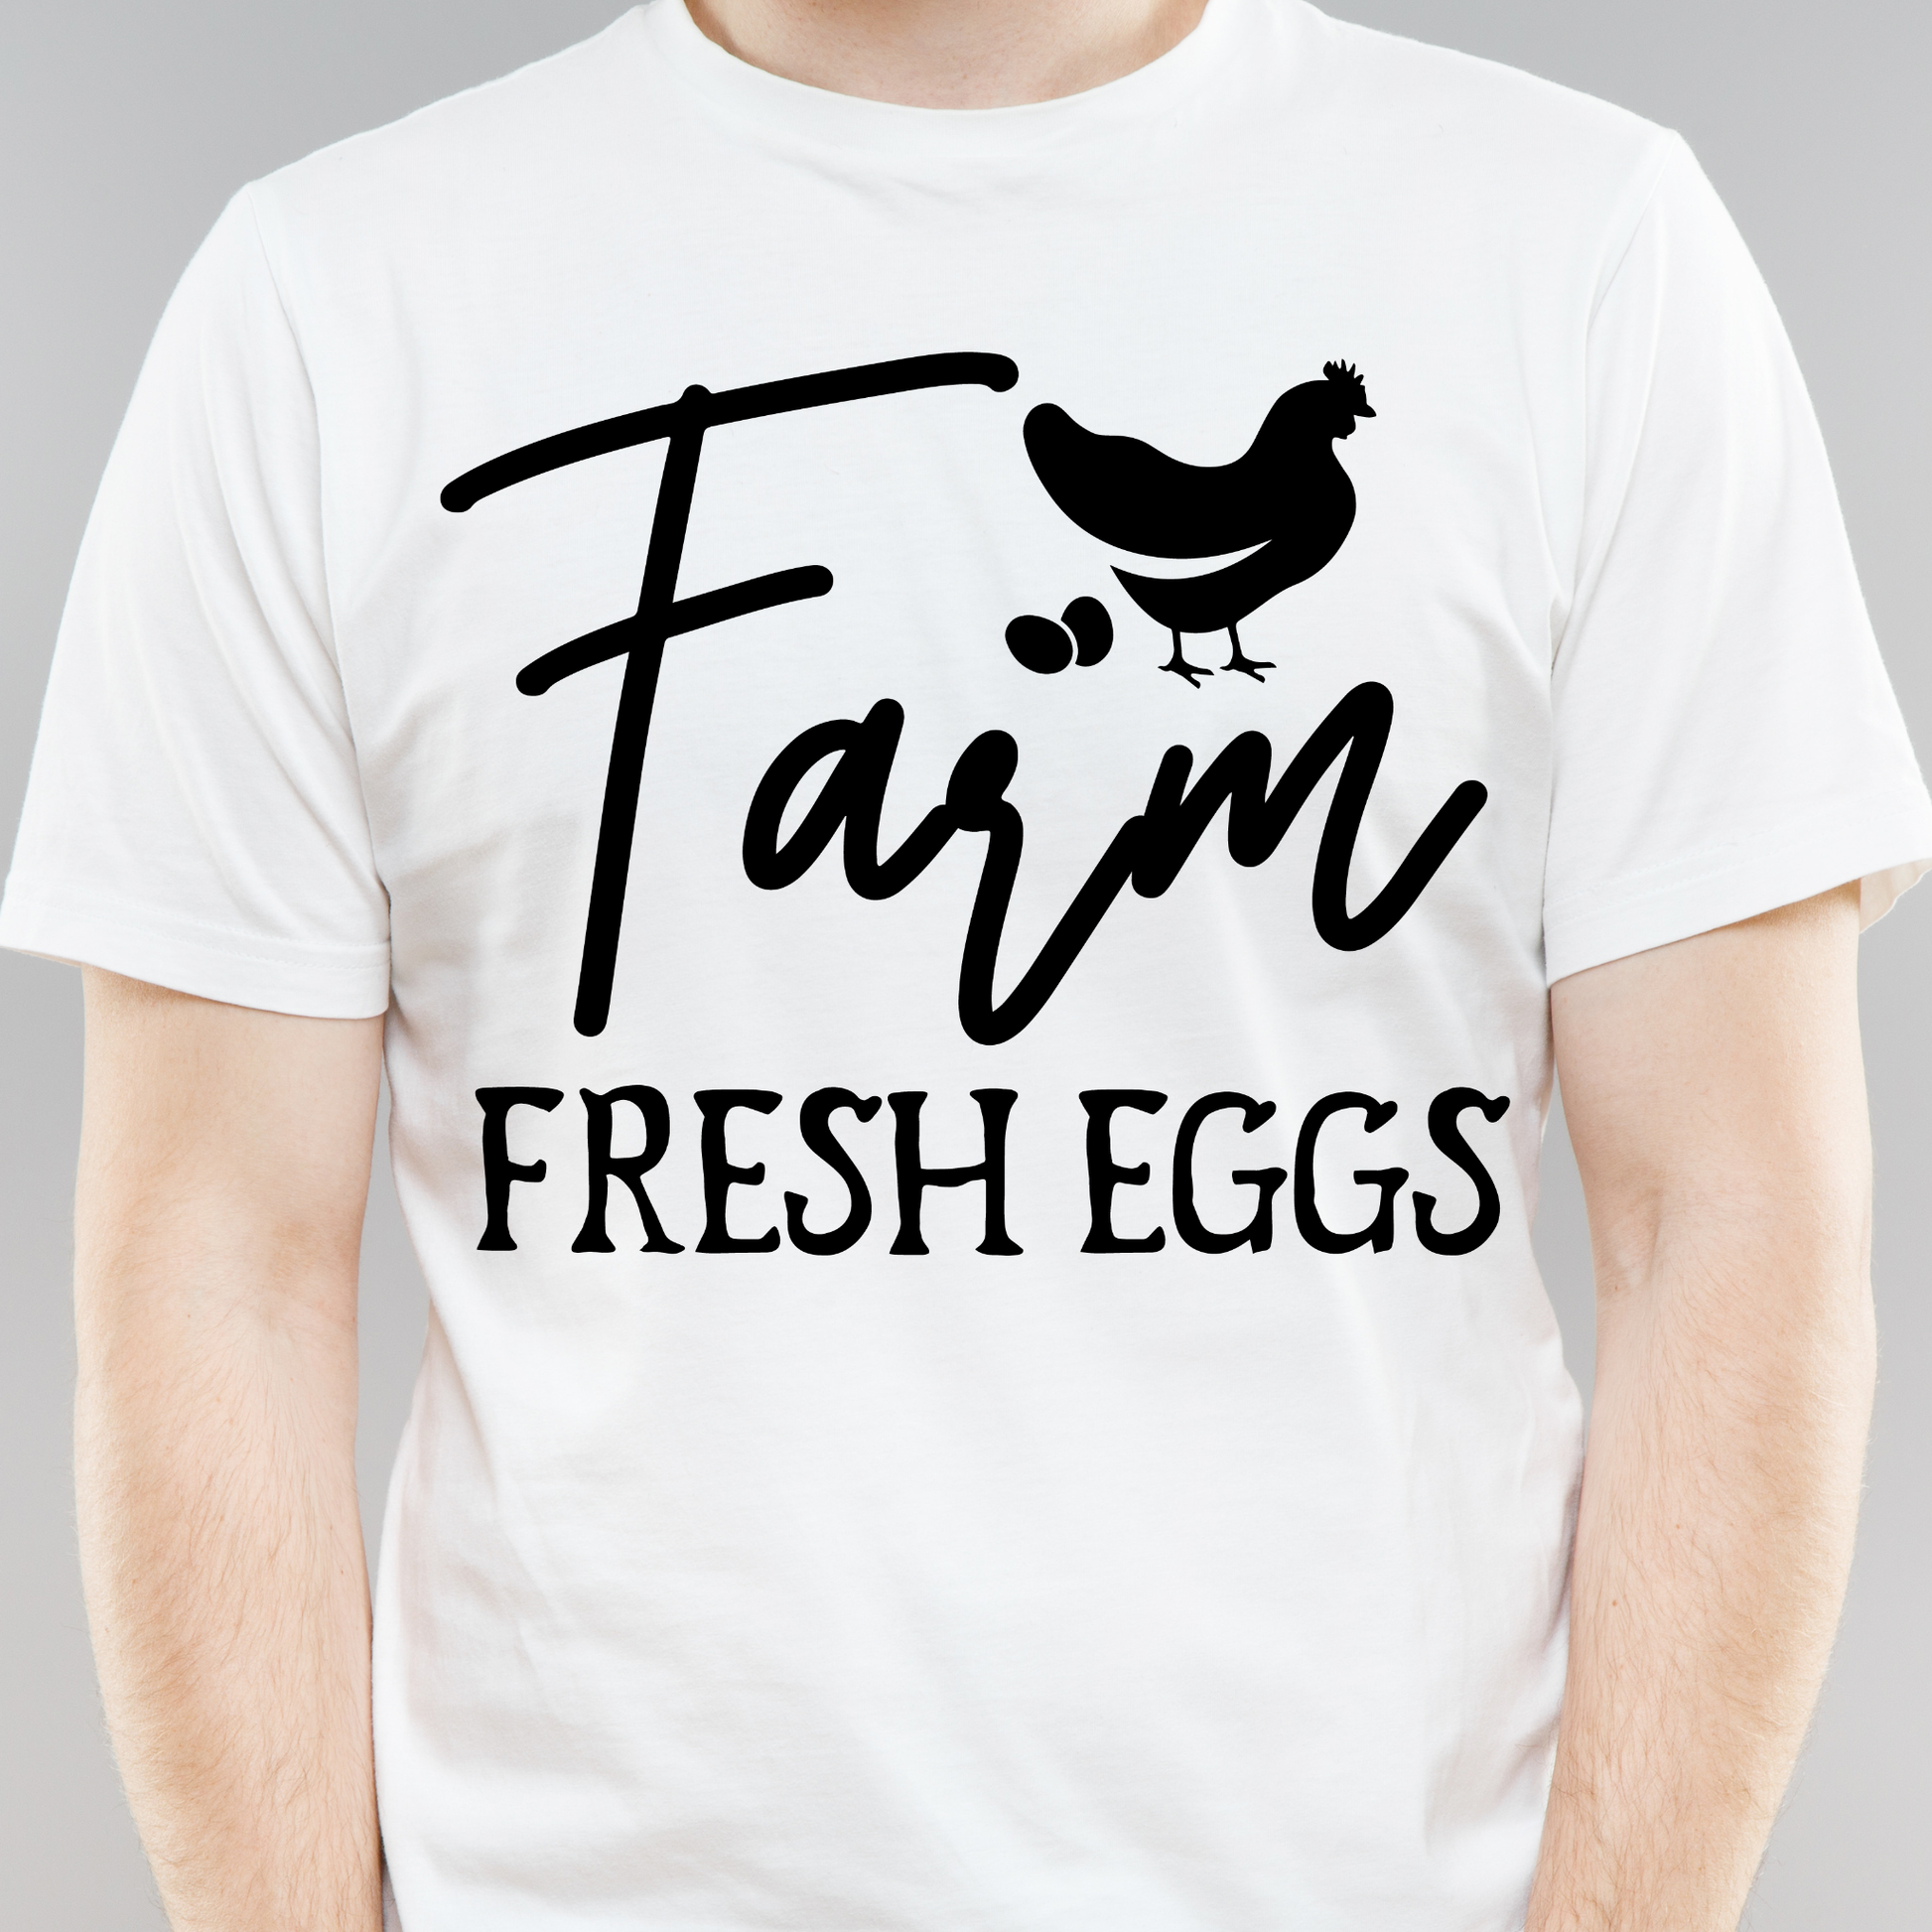 Farm fresh eggs - Men's weird funny t-shirt - Premium t-shirt from Lees Krazy Teez - Just $19.95! Shop now at Lees Krazy Teez